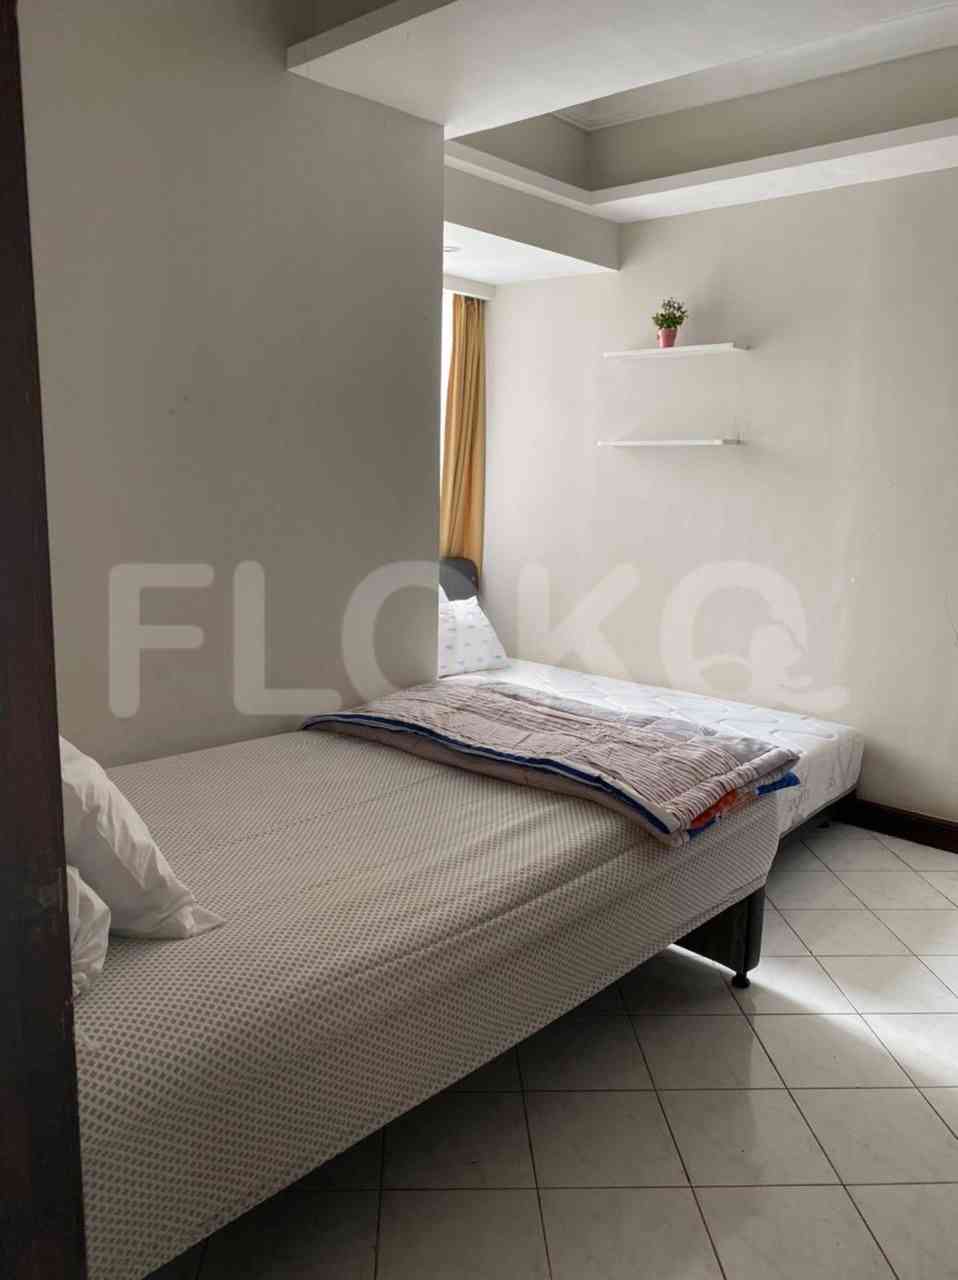 2 Bedroom on 21st Floor for Rent in Taman Anggrek Residence - ftab5c 1